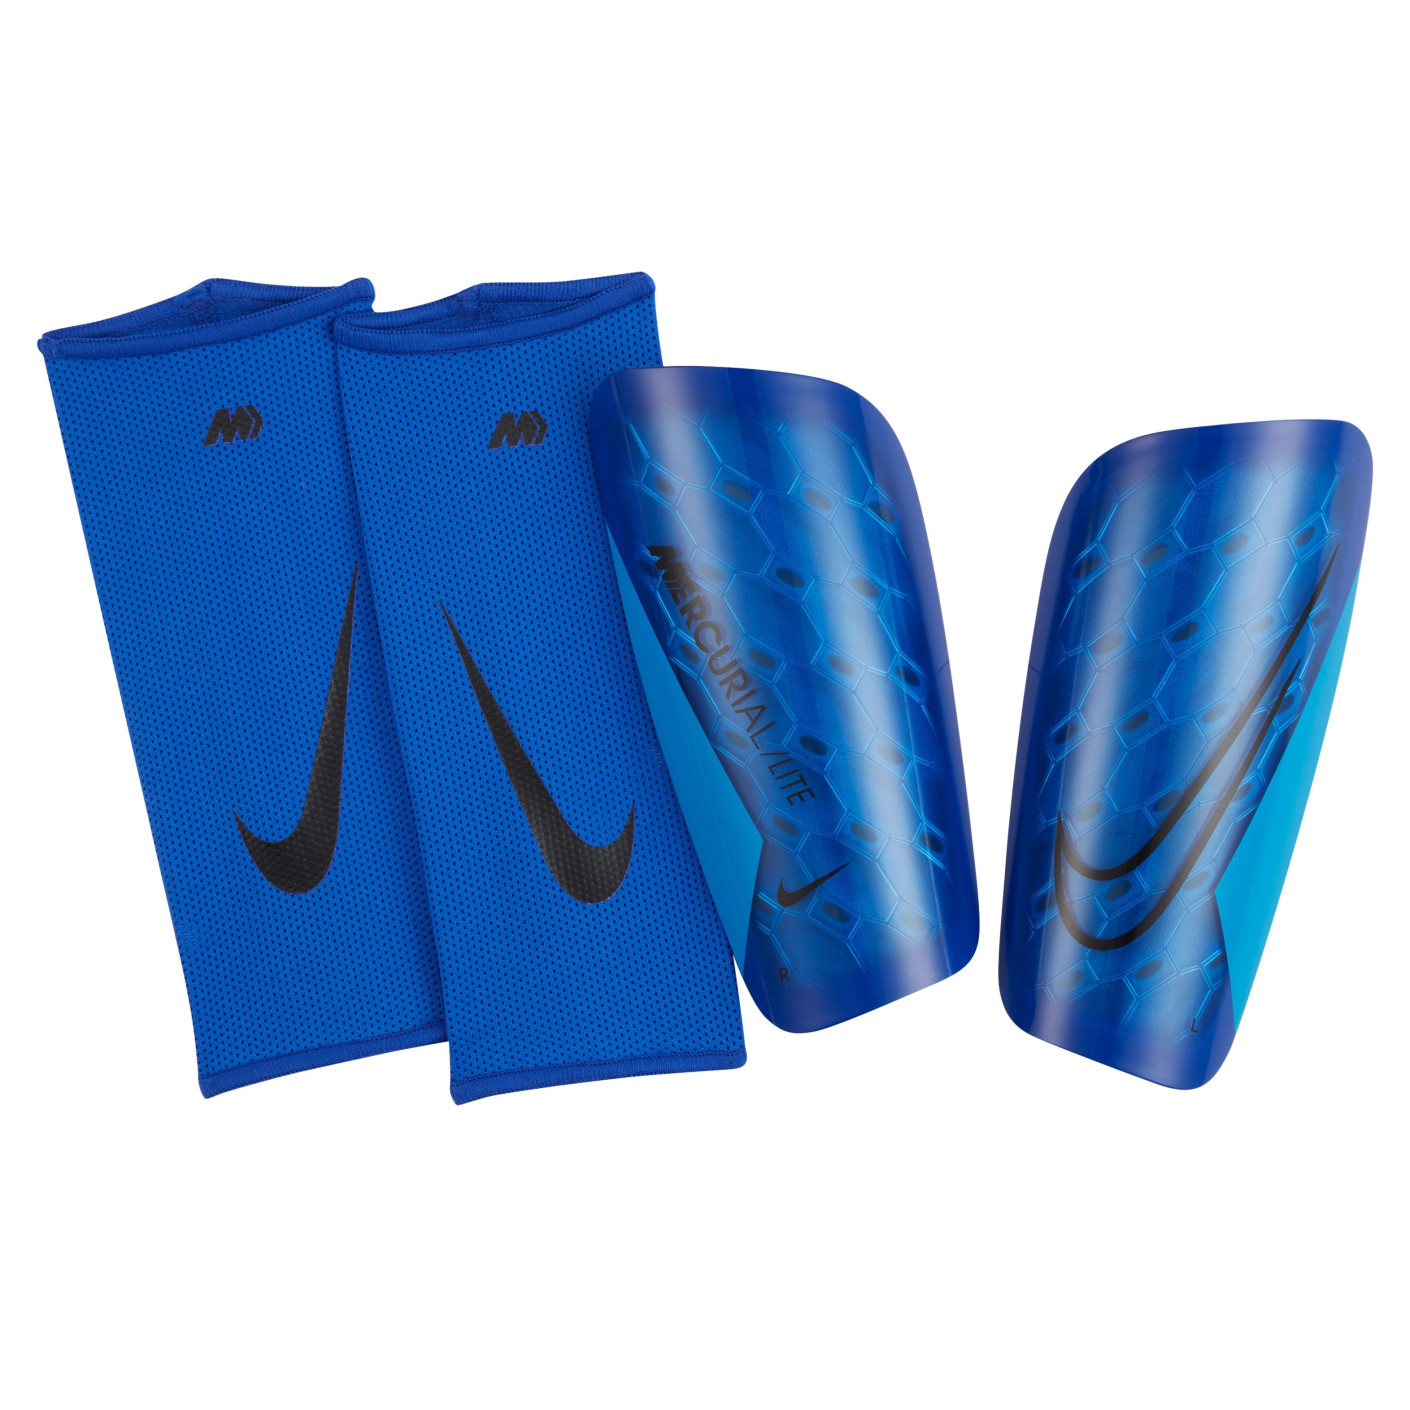 Protège-tibias de football Nike CR7 Mercurial Lite - Tibias - Protections -  Gardiens